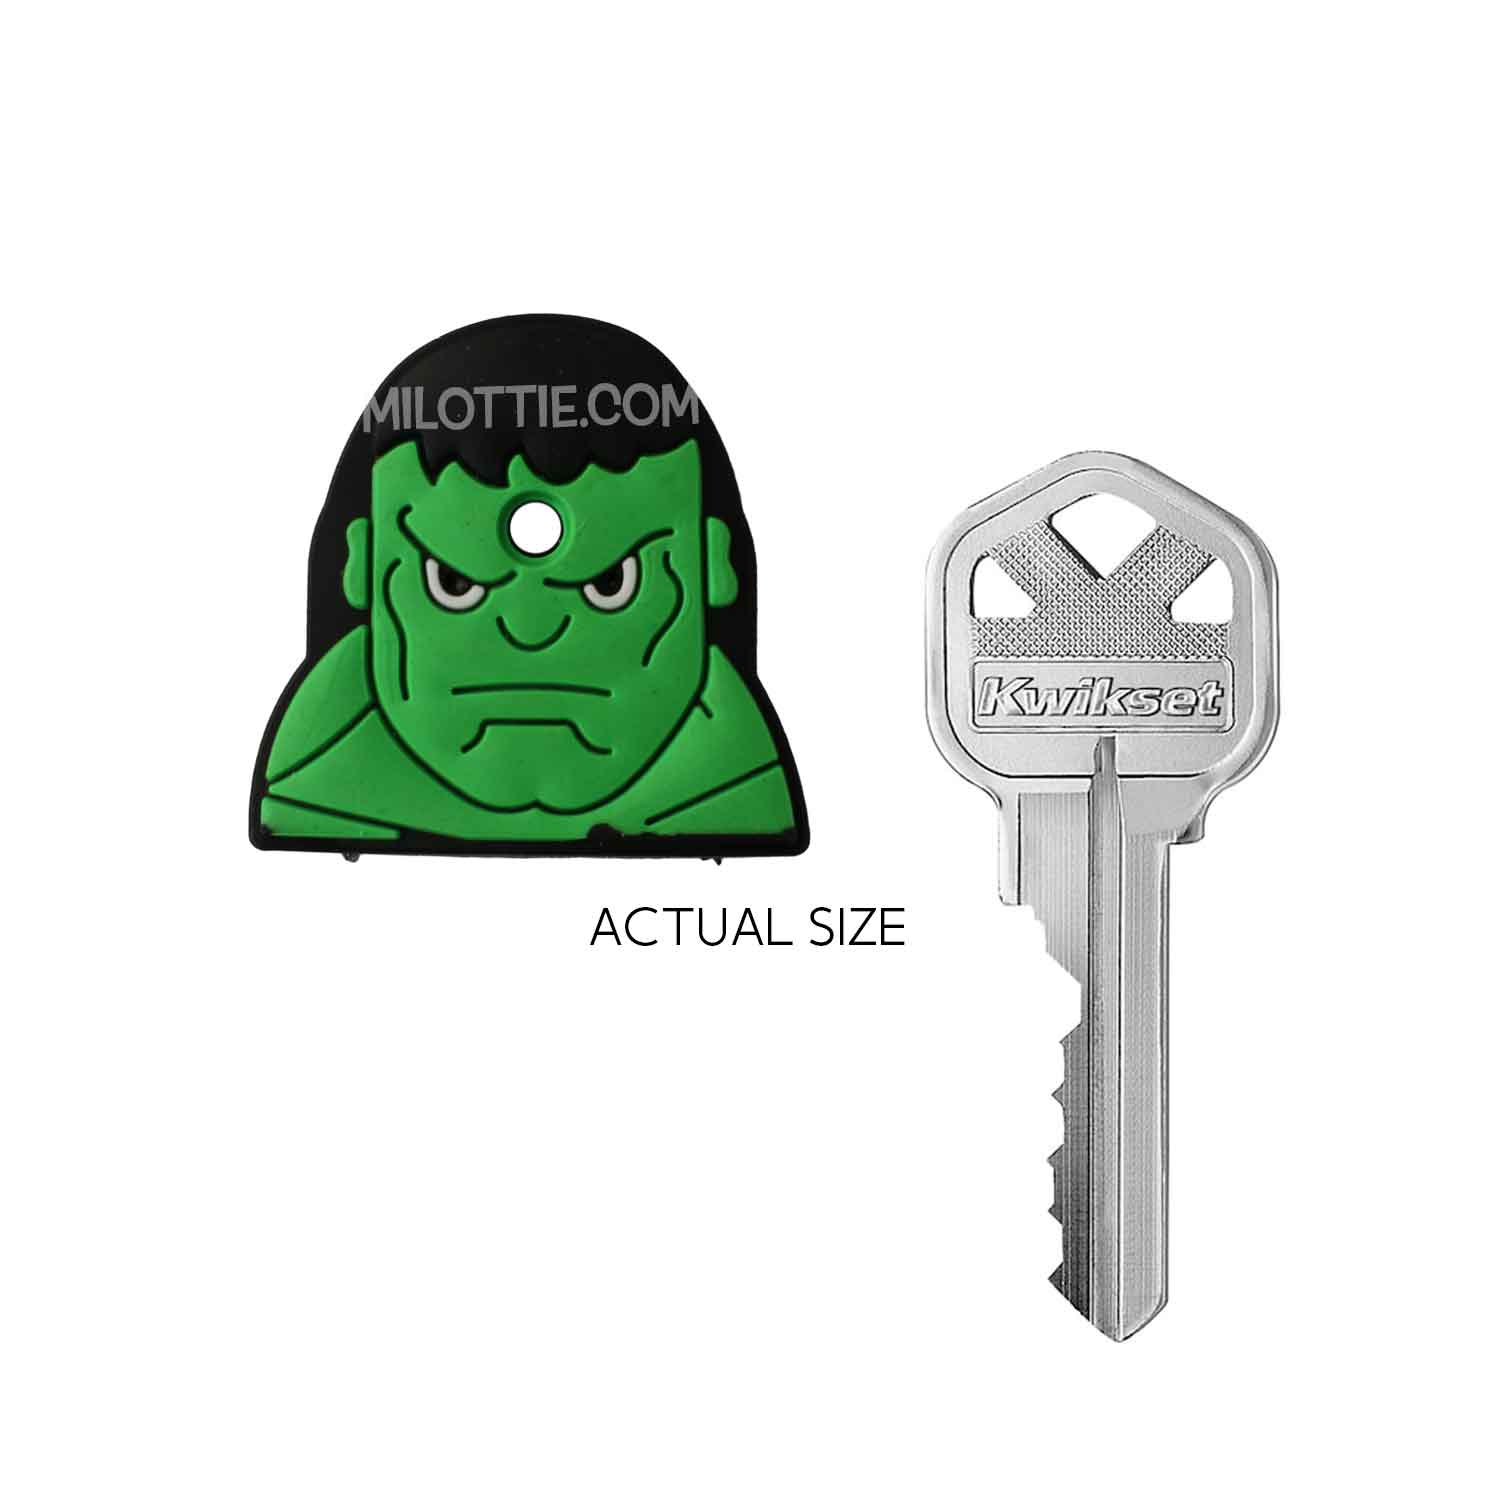 The hulk key cap - Milottie